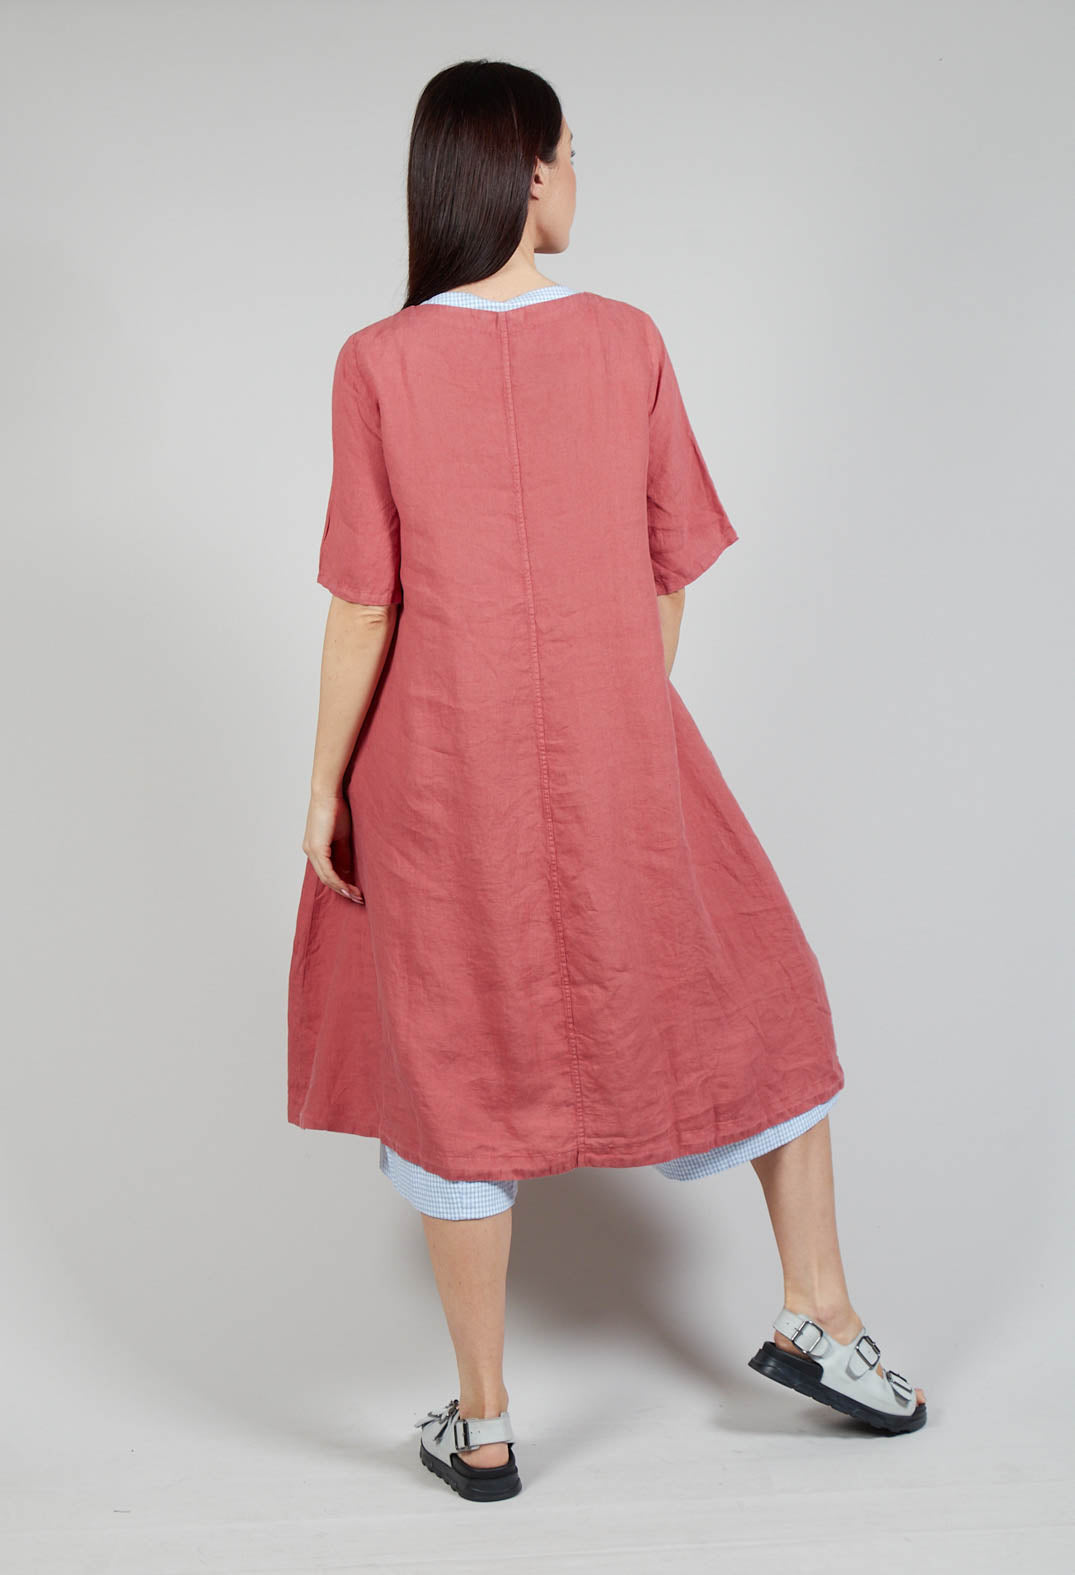 Short Sleeve Dress in Terracotta